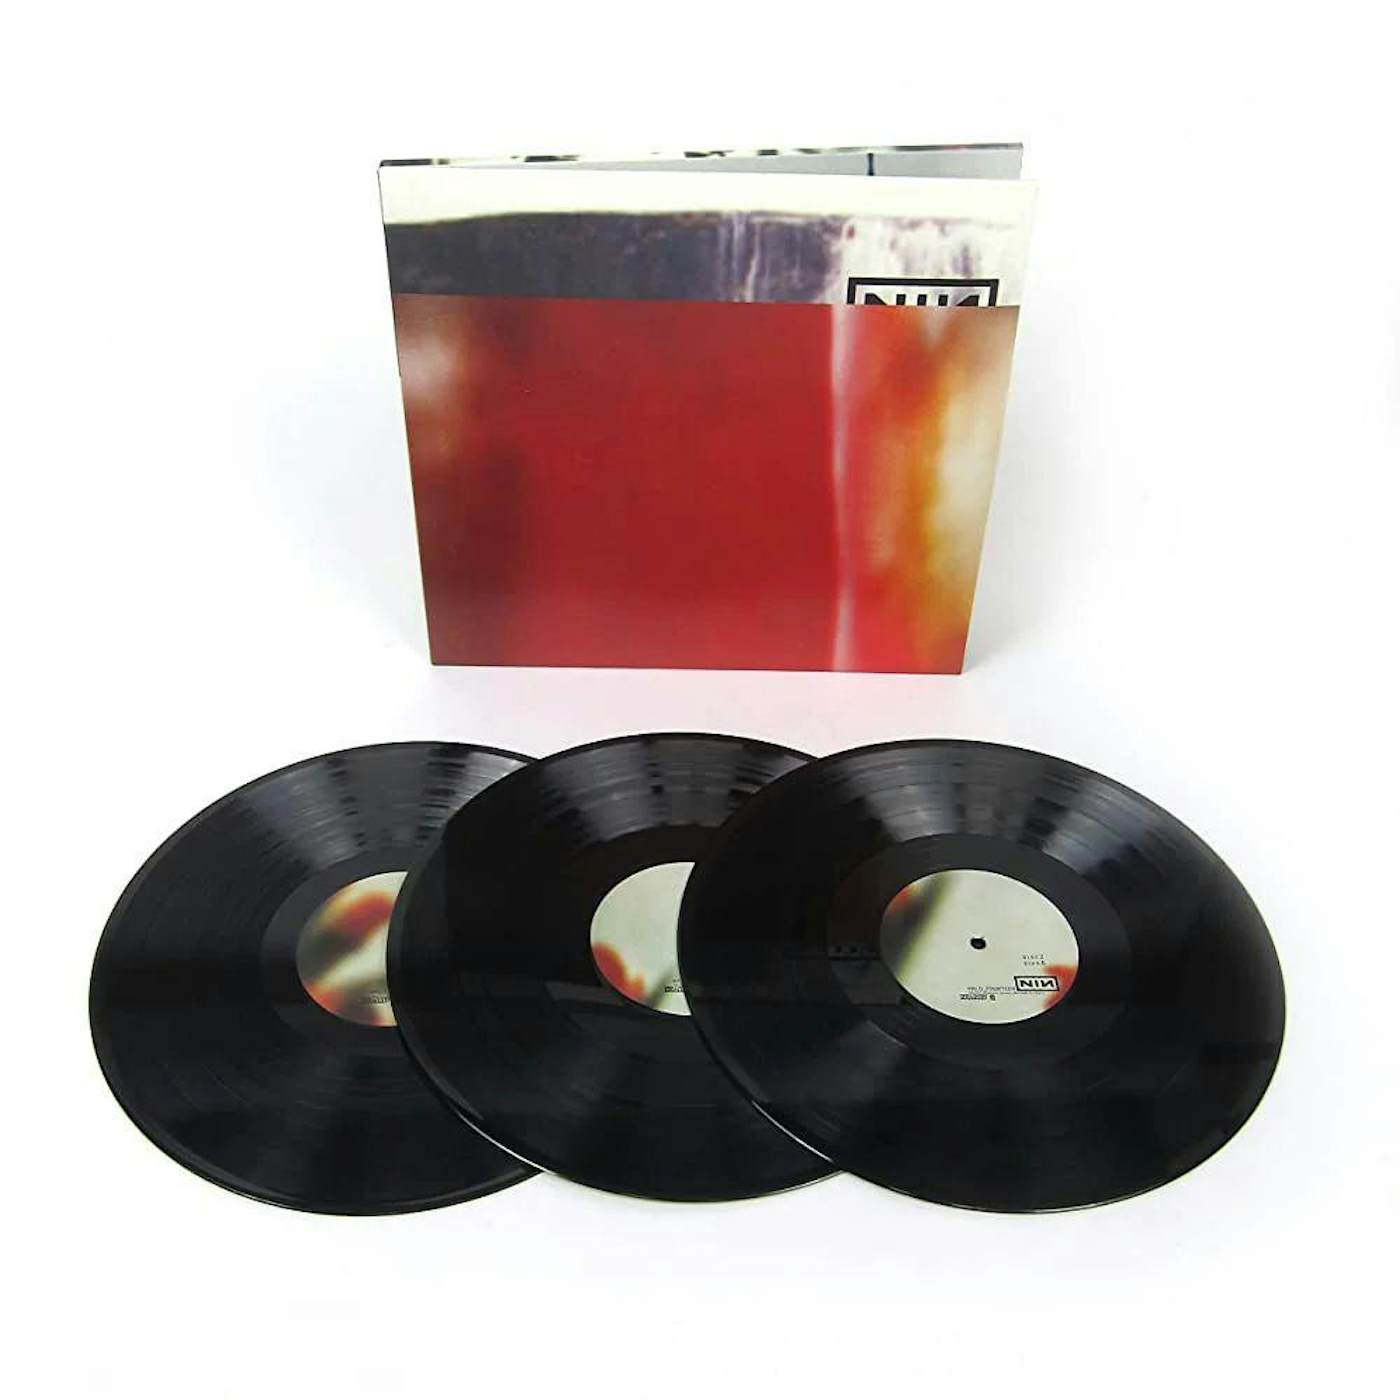 Tool: Lateralus (Picture Disc Vinyl) (2 LP's) – The Rock Den Music